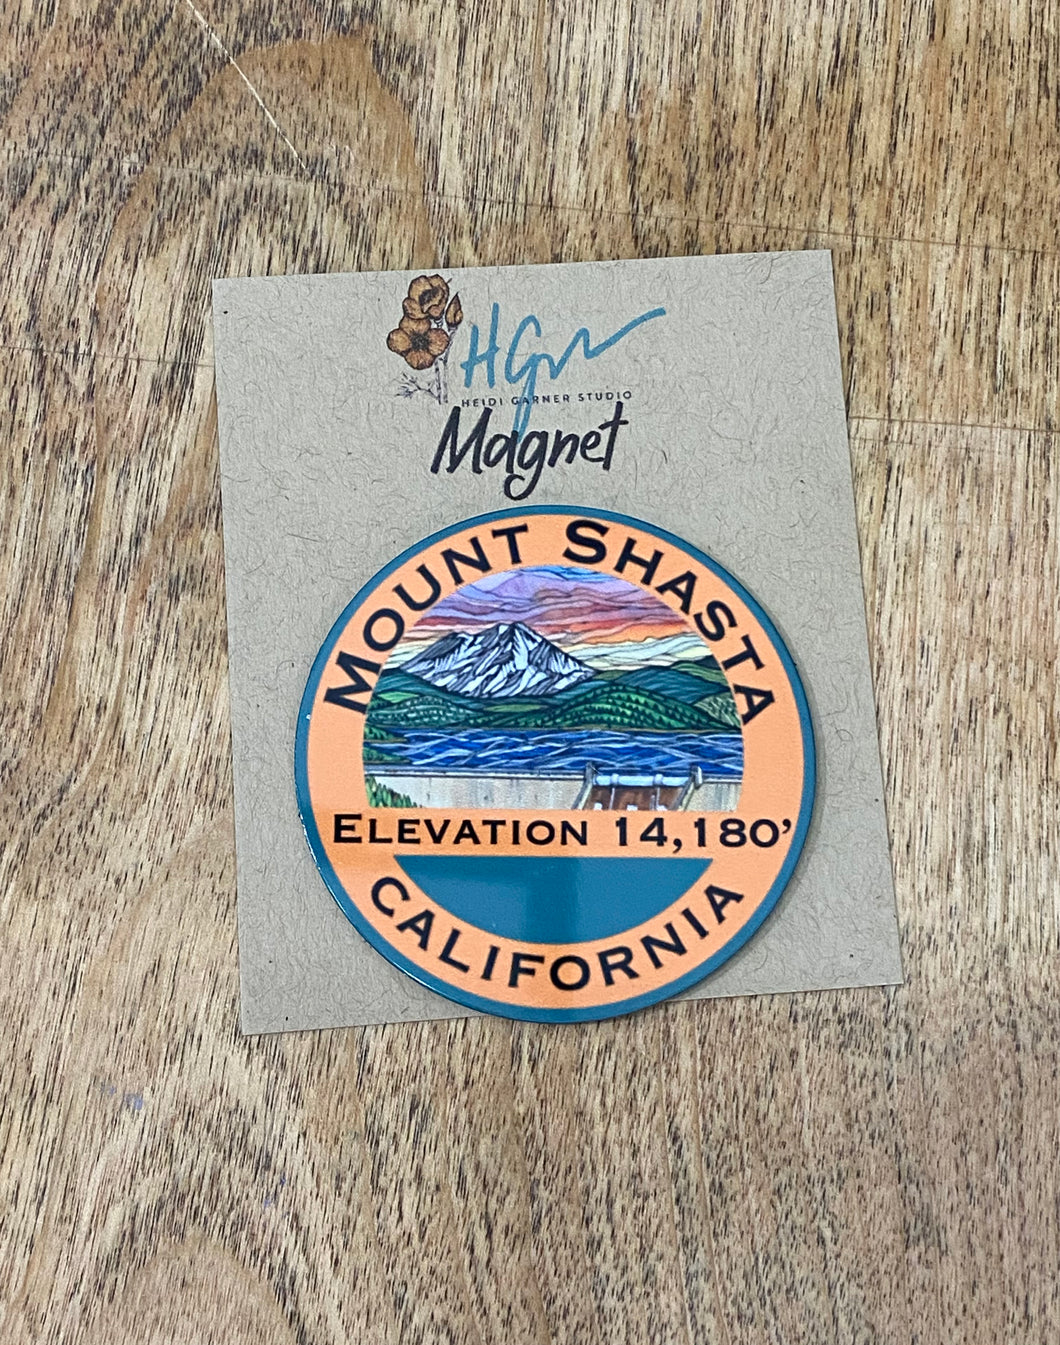 Mount Shasta Magnet